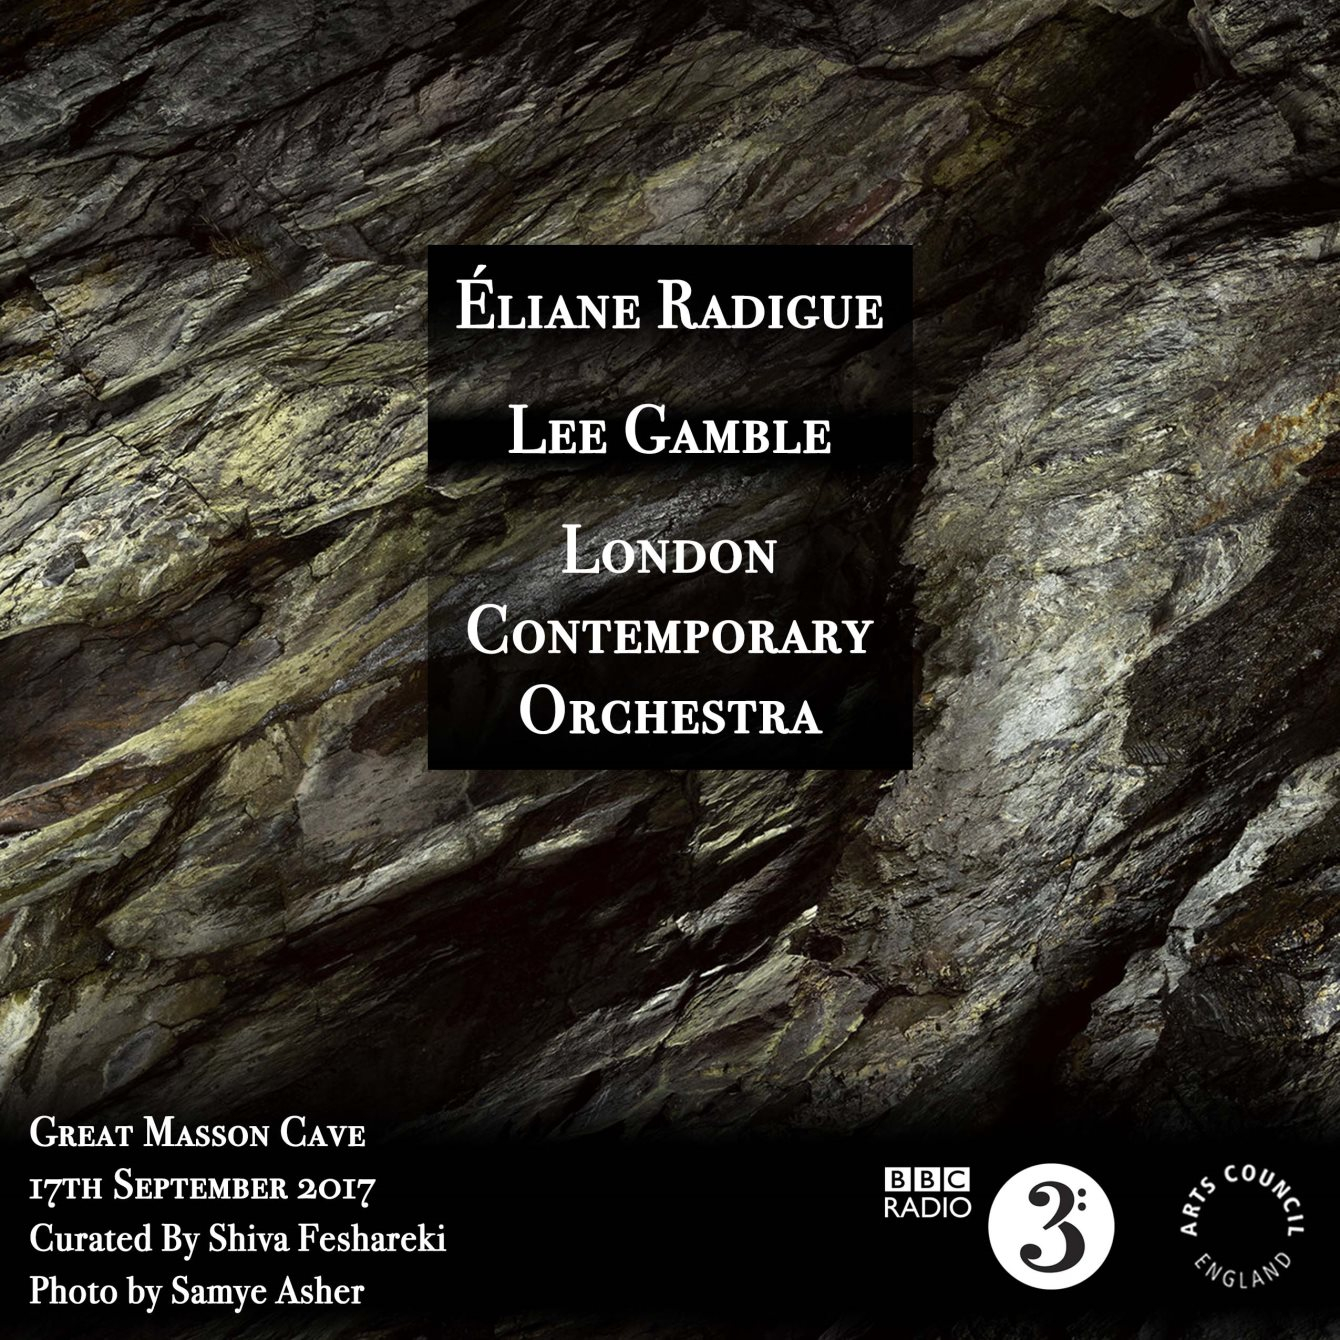 Éliane Radigue & Lee Gamble - Great Masson Cave - Flyer front